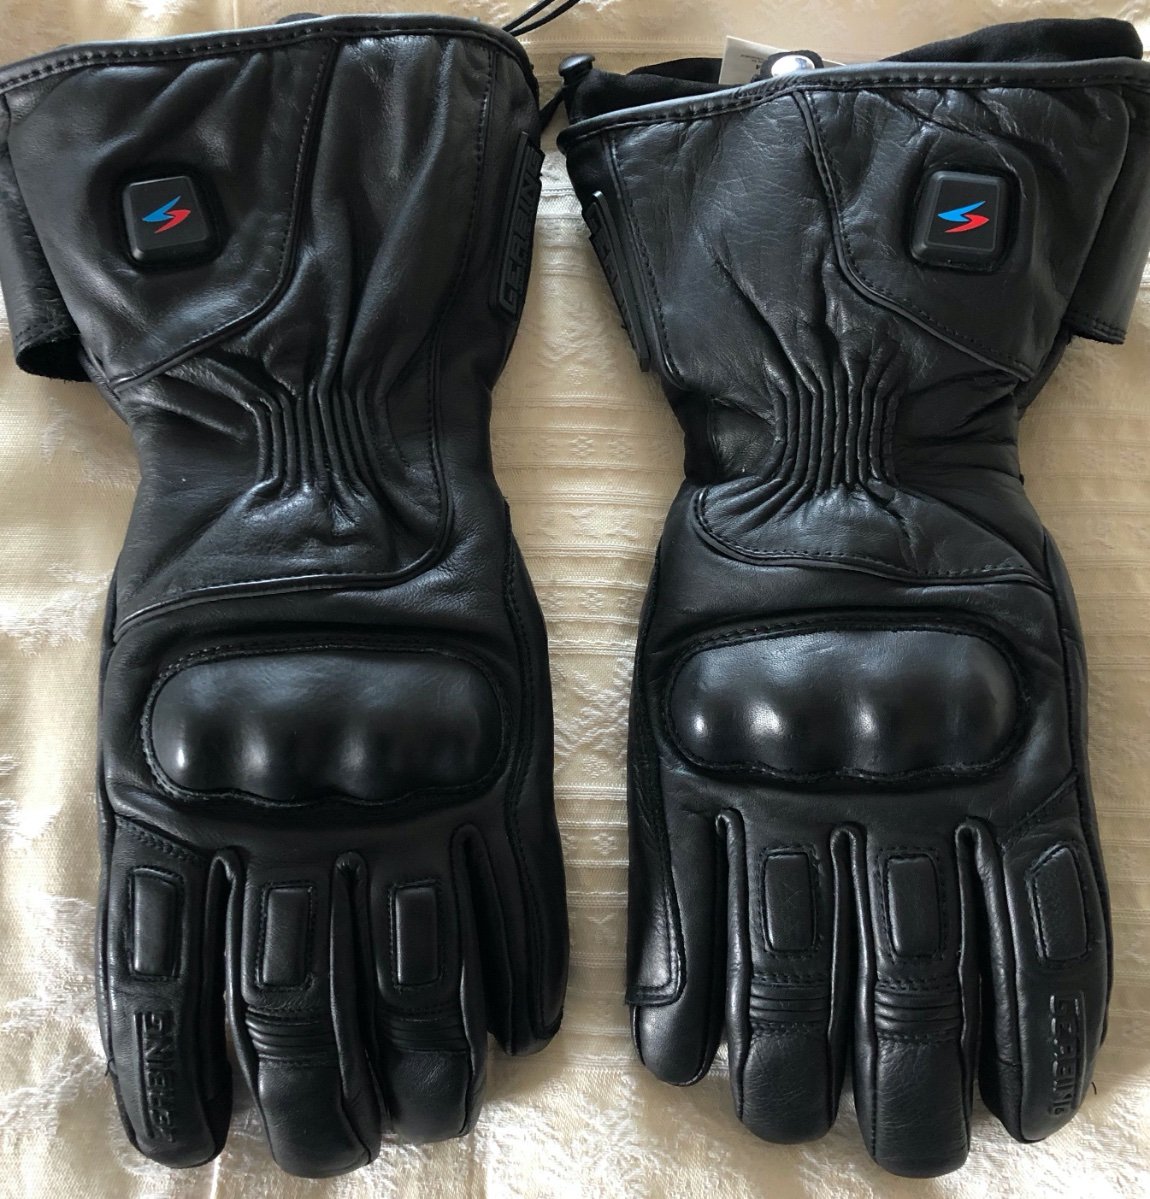 Gerbing Heated Gloves